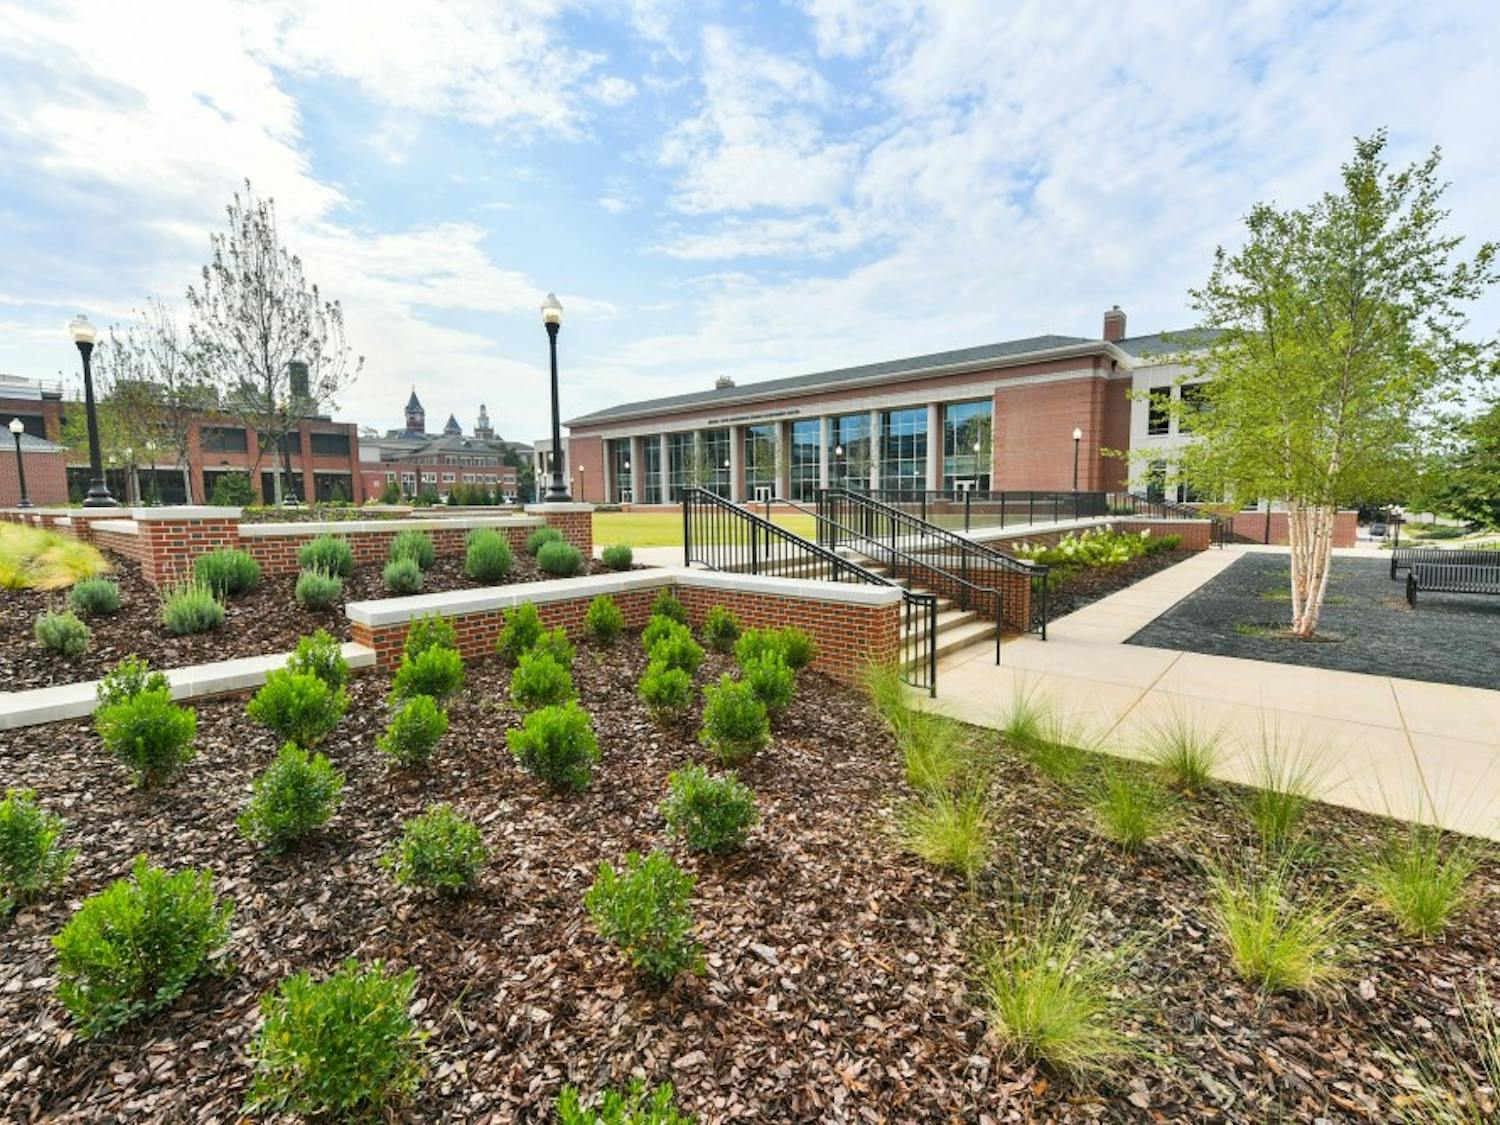 Brown-Kopel Engineering Student Achievement Center